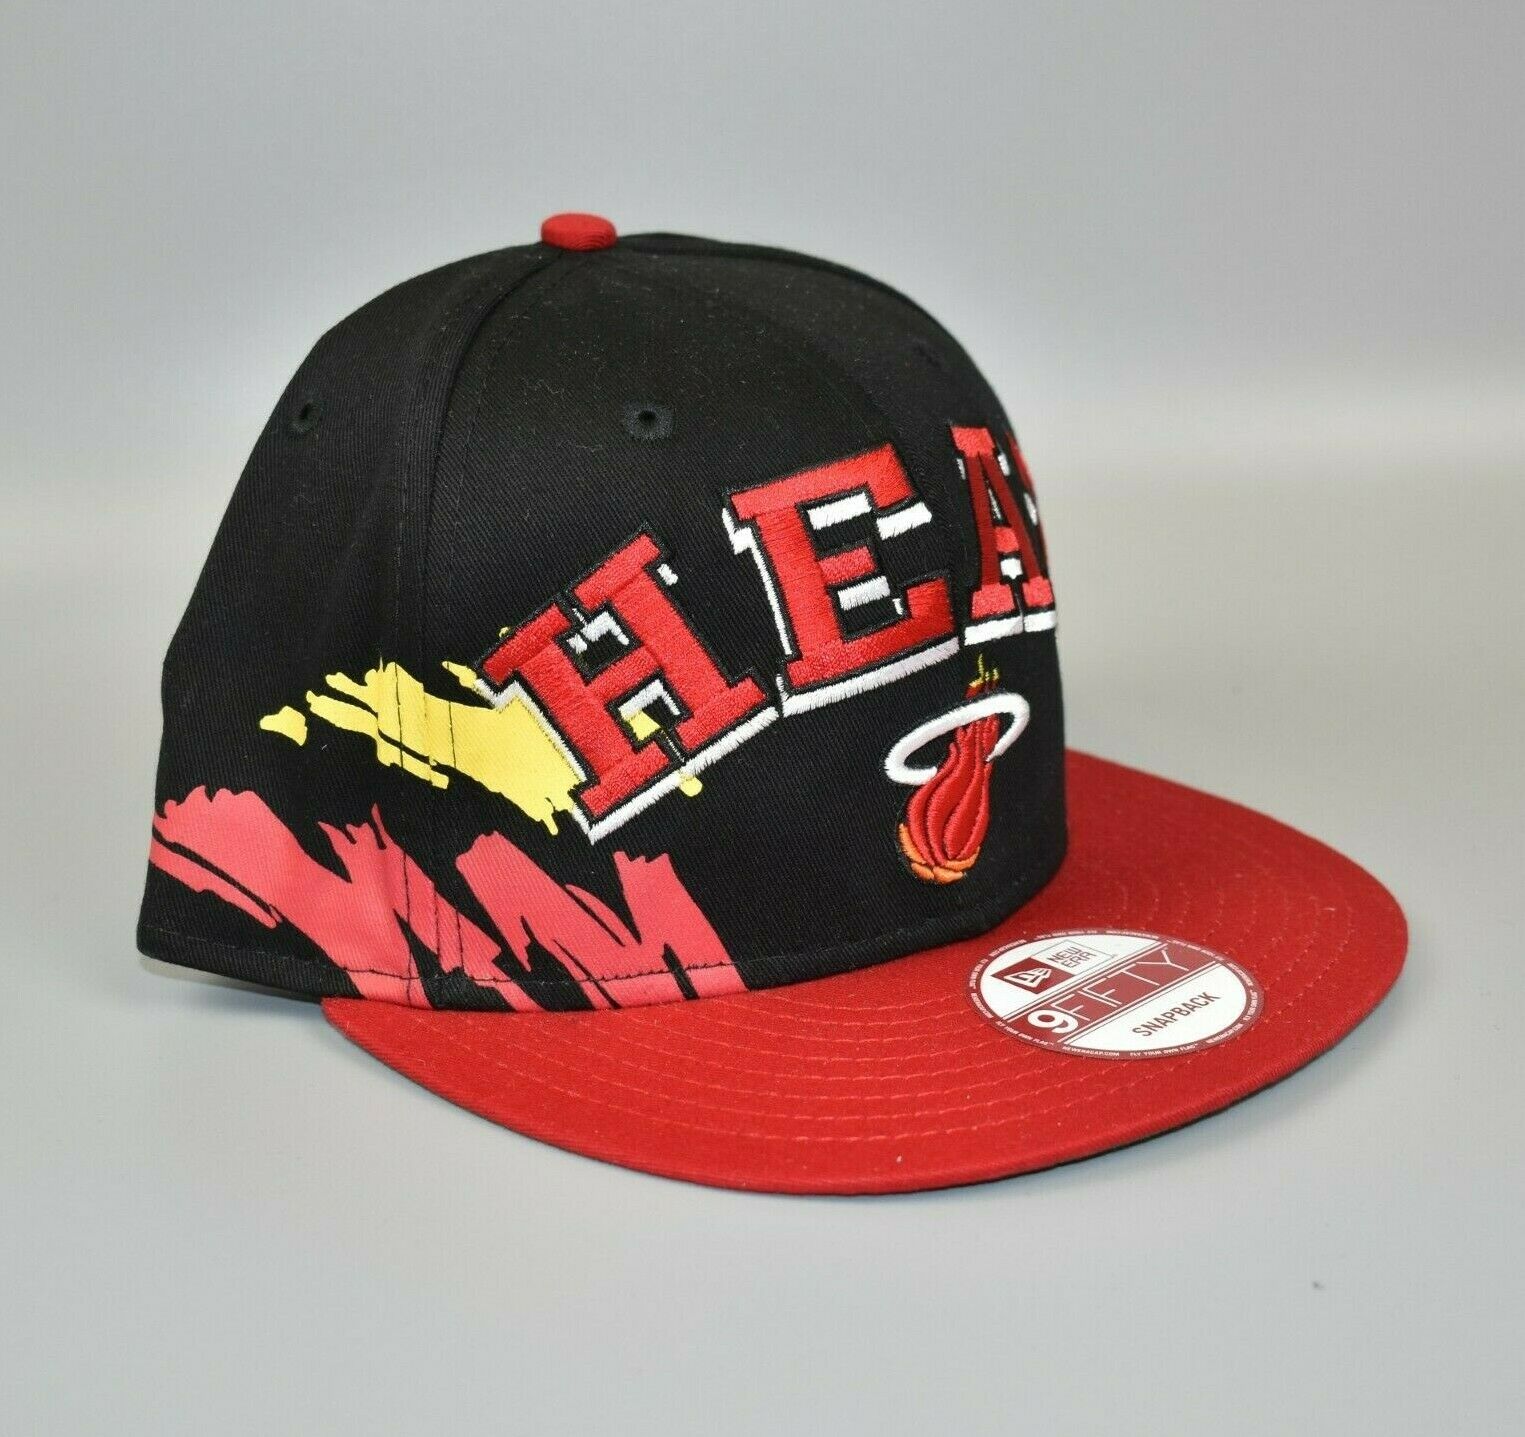 New Era Fits Snapback Miami Heat Hat Cap NBA Hardwood Classics Red Black